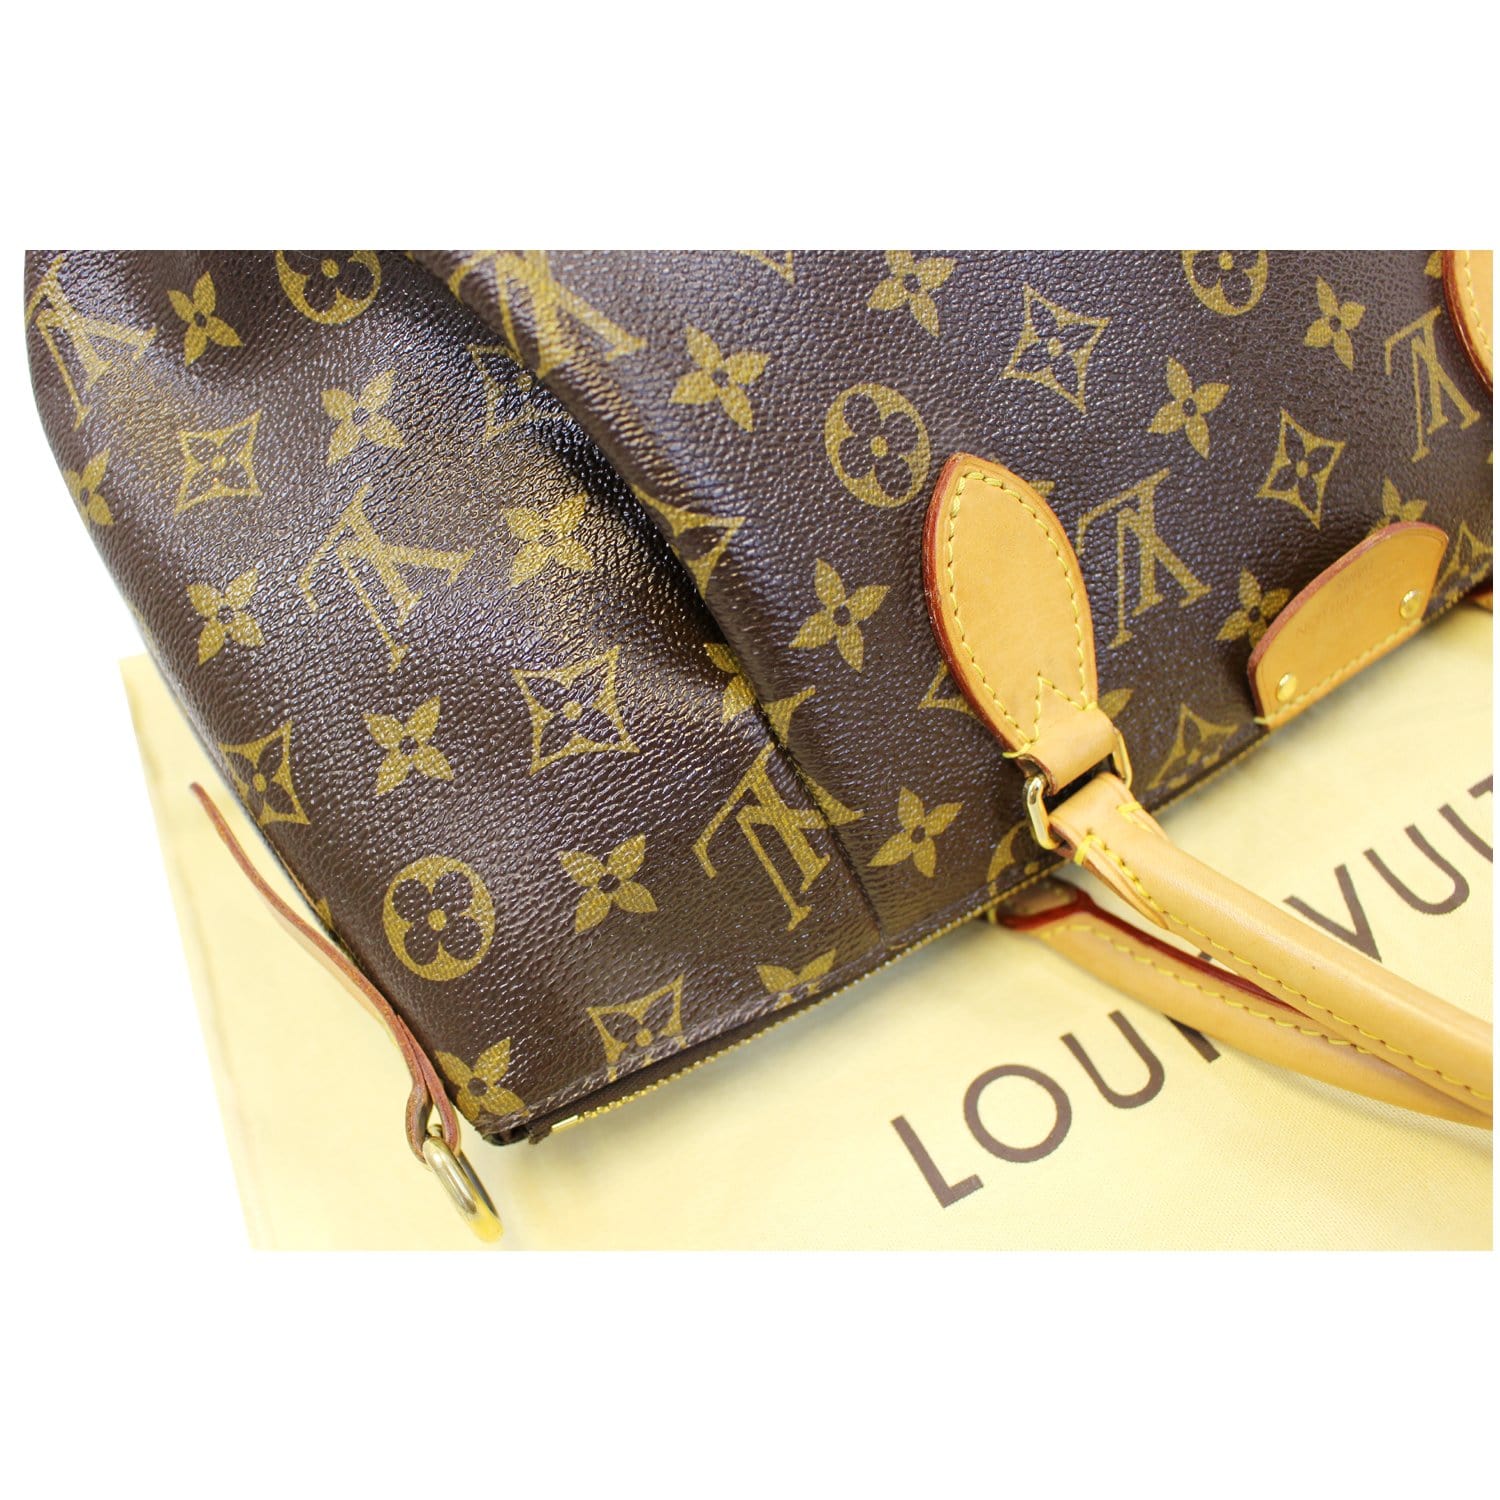 Louis Vuitton Turenne Monogram Handbag MM Canvas with Dust Bag and Strap